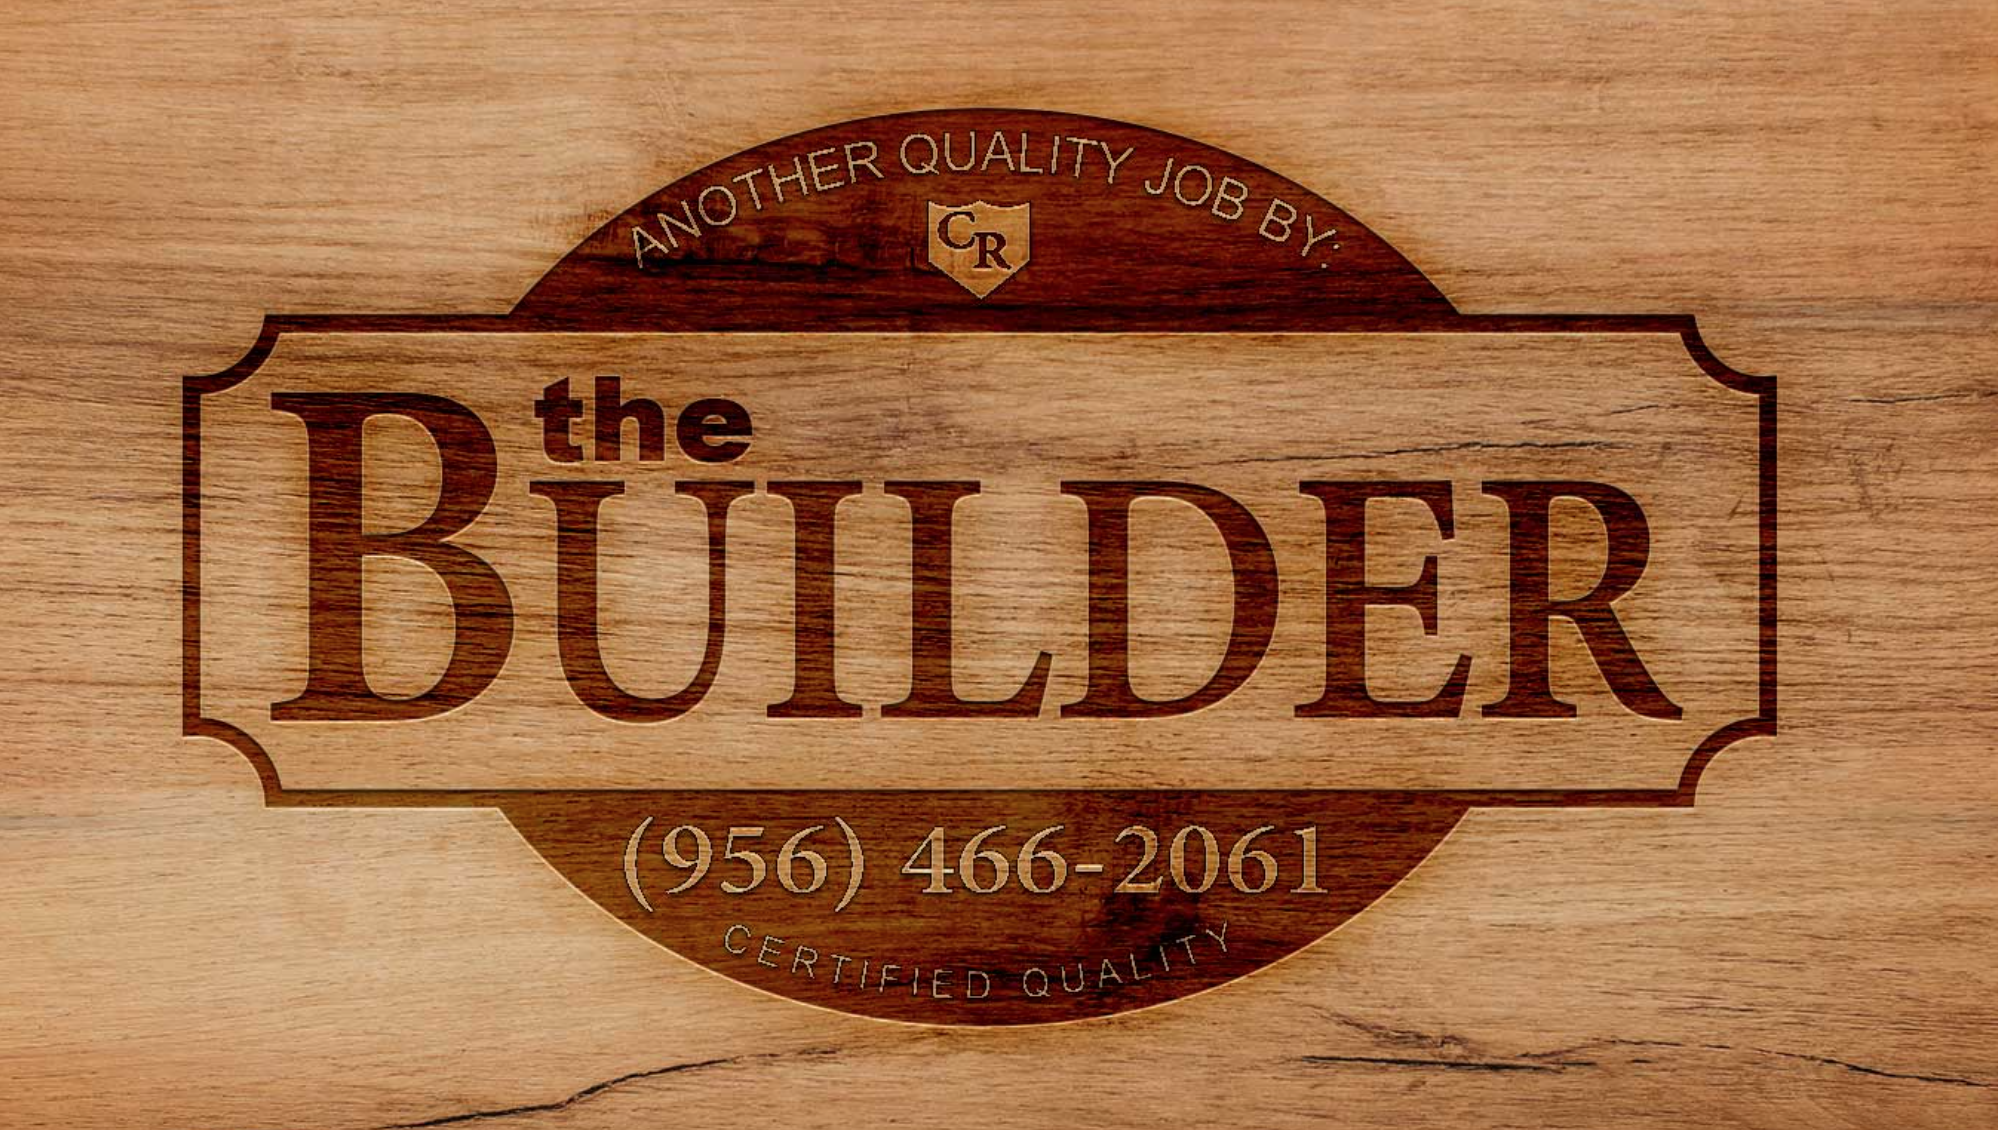 The Builder Logo